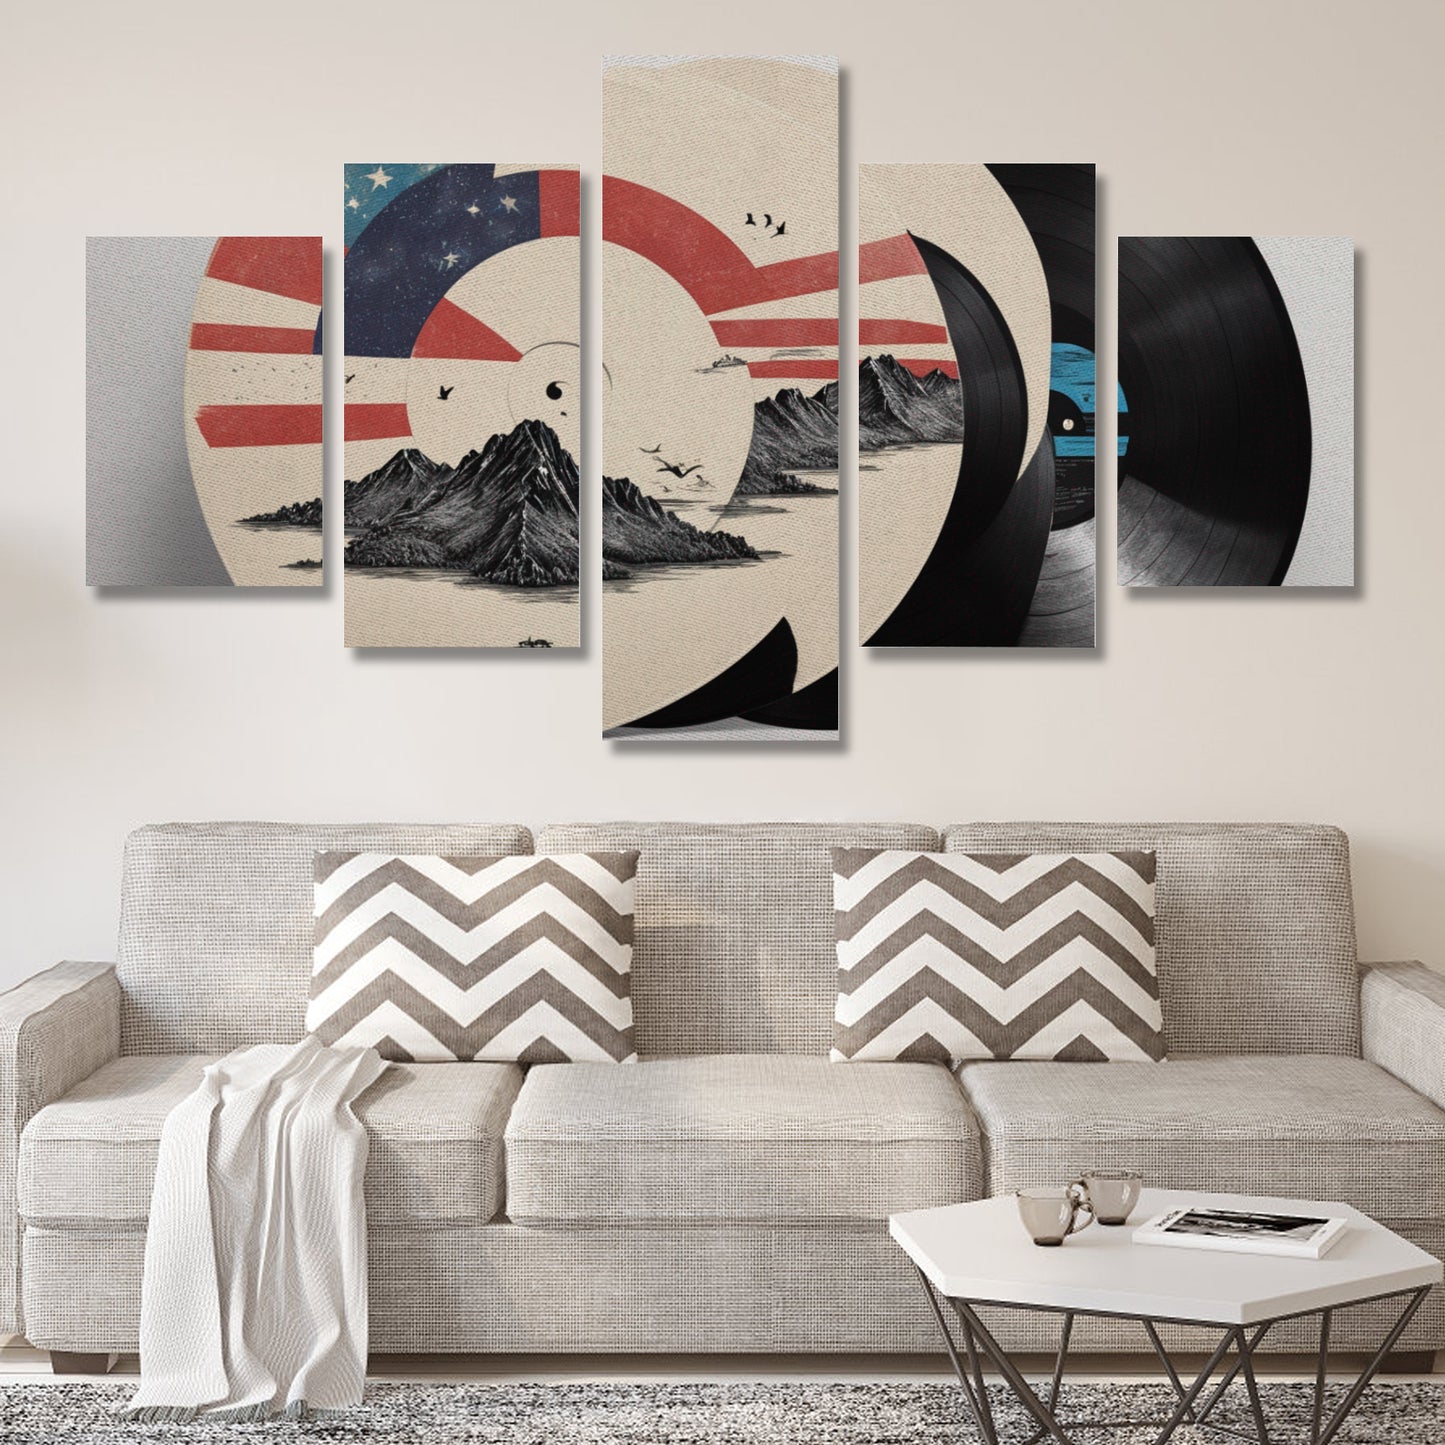 Canvas Wall Art Prints (No Frame) 5-Pieces/Set A